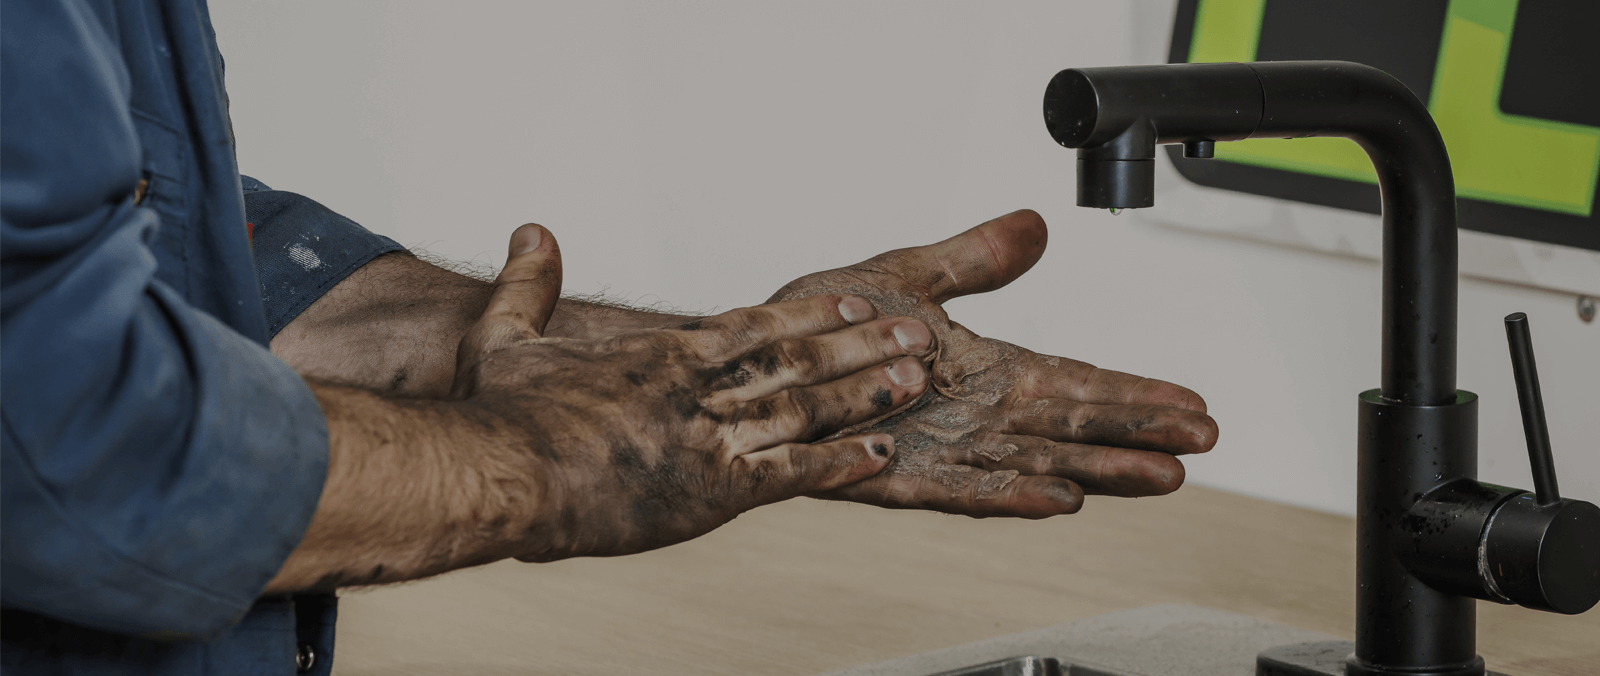 Grip Clean Hand Cleaner for Auto Mechanics, Heavy Duty Pumice Soap +  Fingernail Brush, Tool Shop, Ga…See more Grip Clean Hand Cleaner for Auto